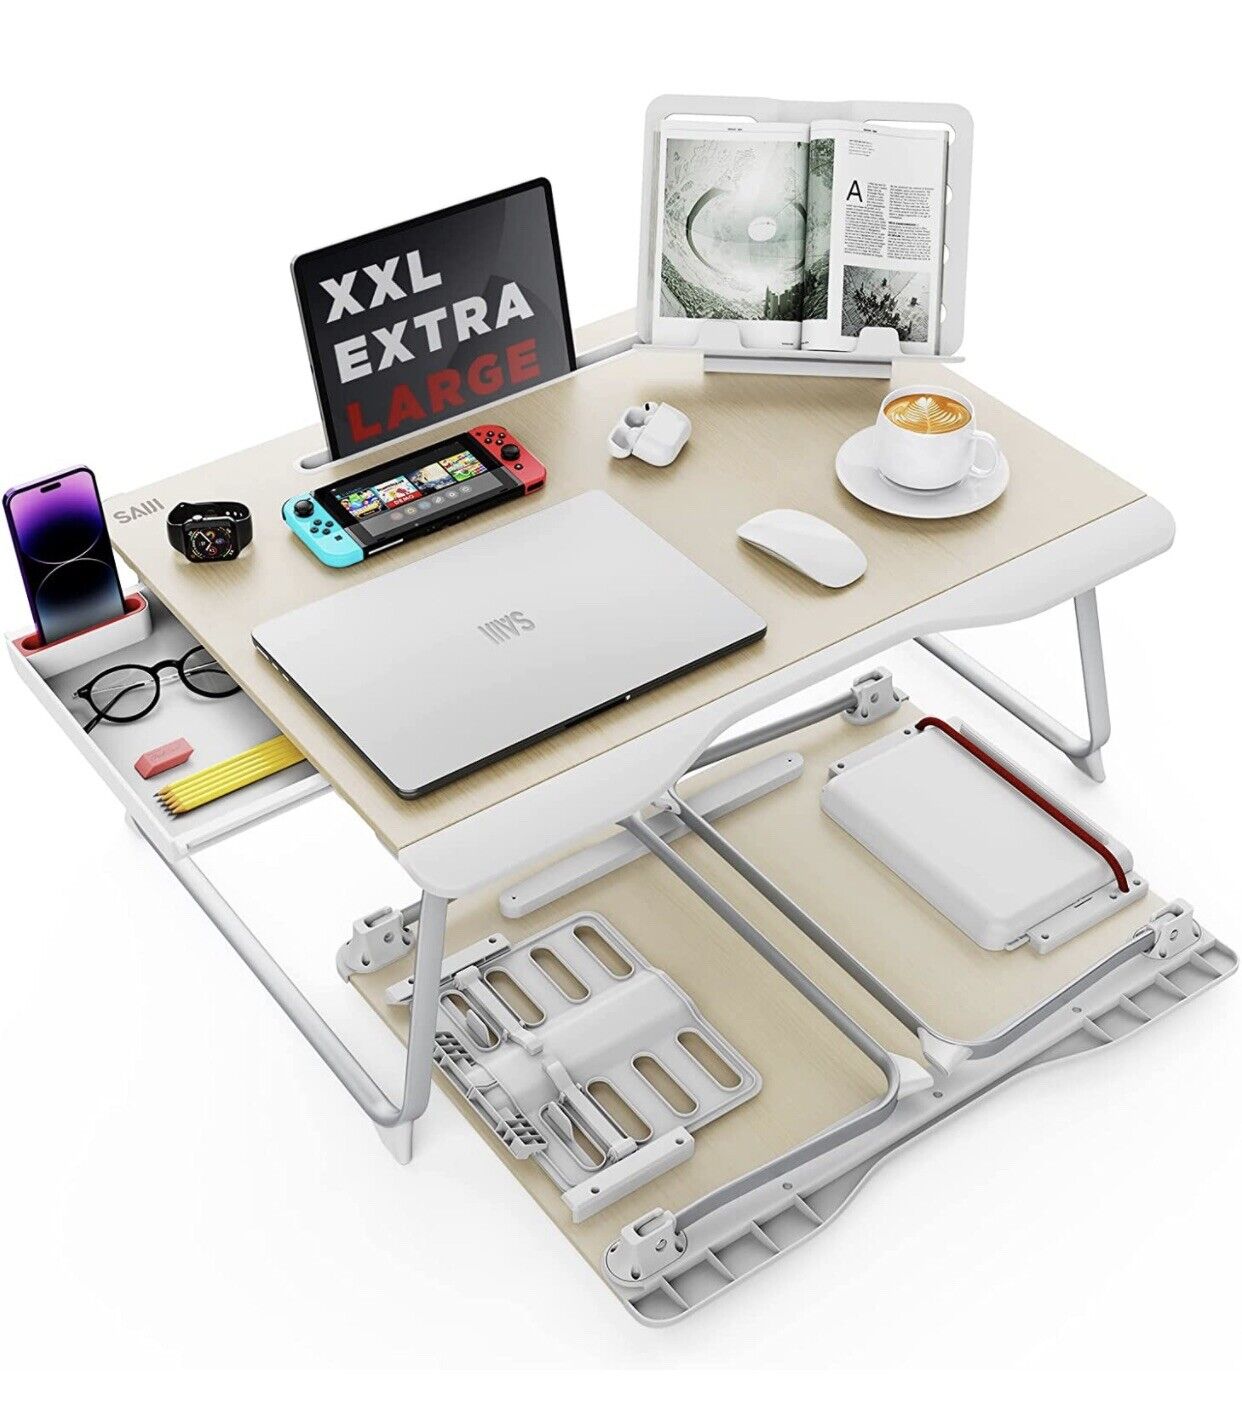 SAIJI Folding Bed Desk for Laptop, Eating Breakfast, Writing, Gaming, Extra Larg